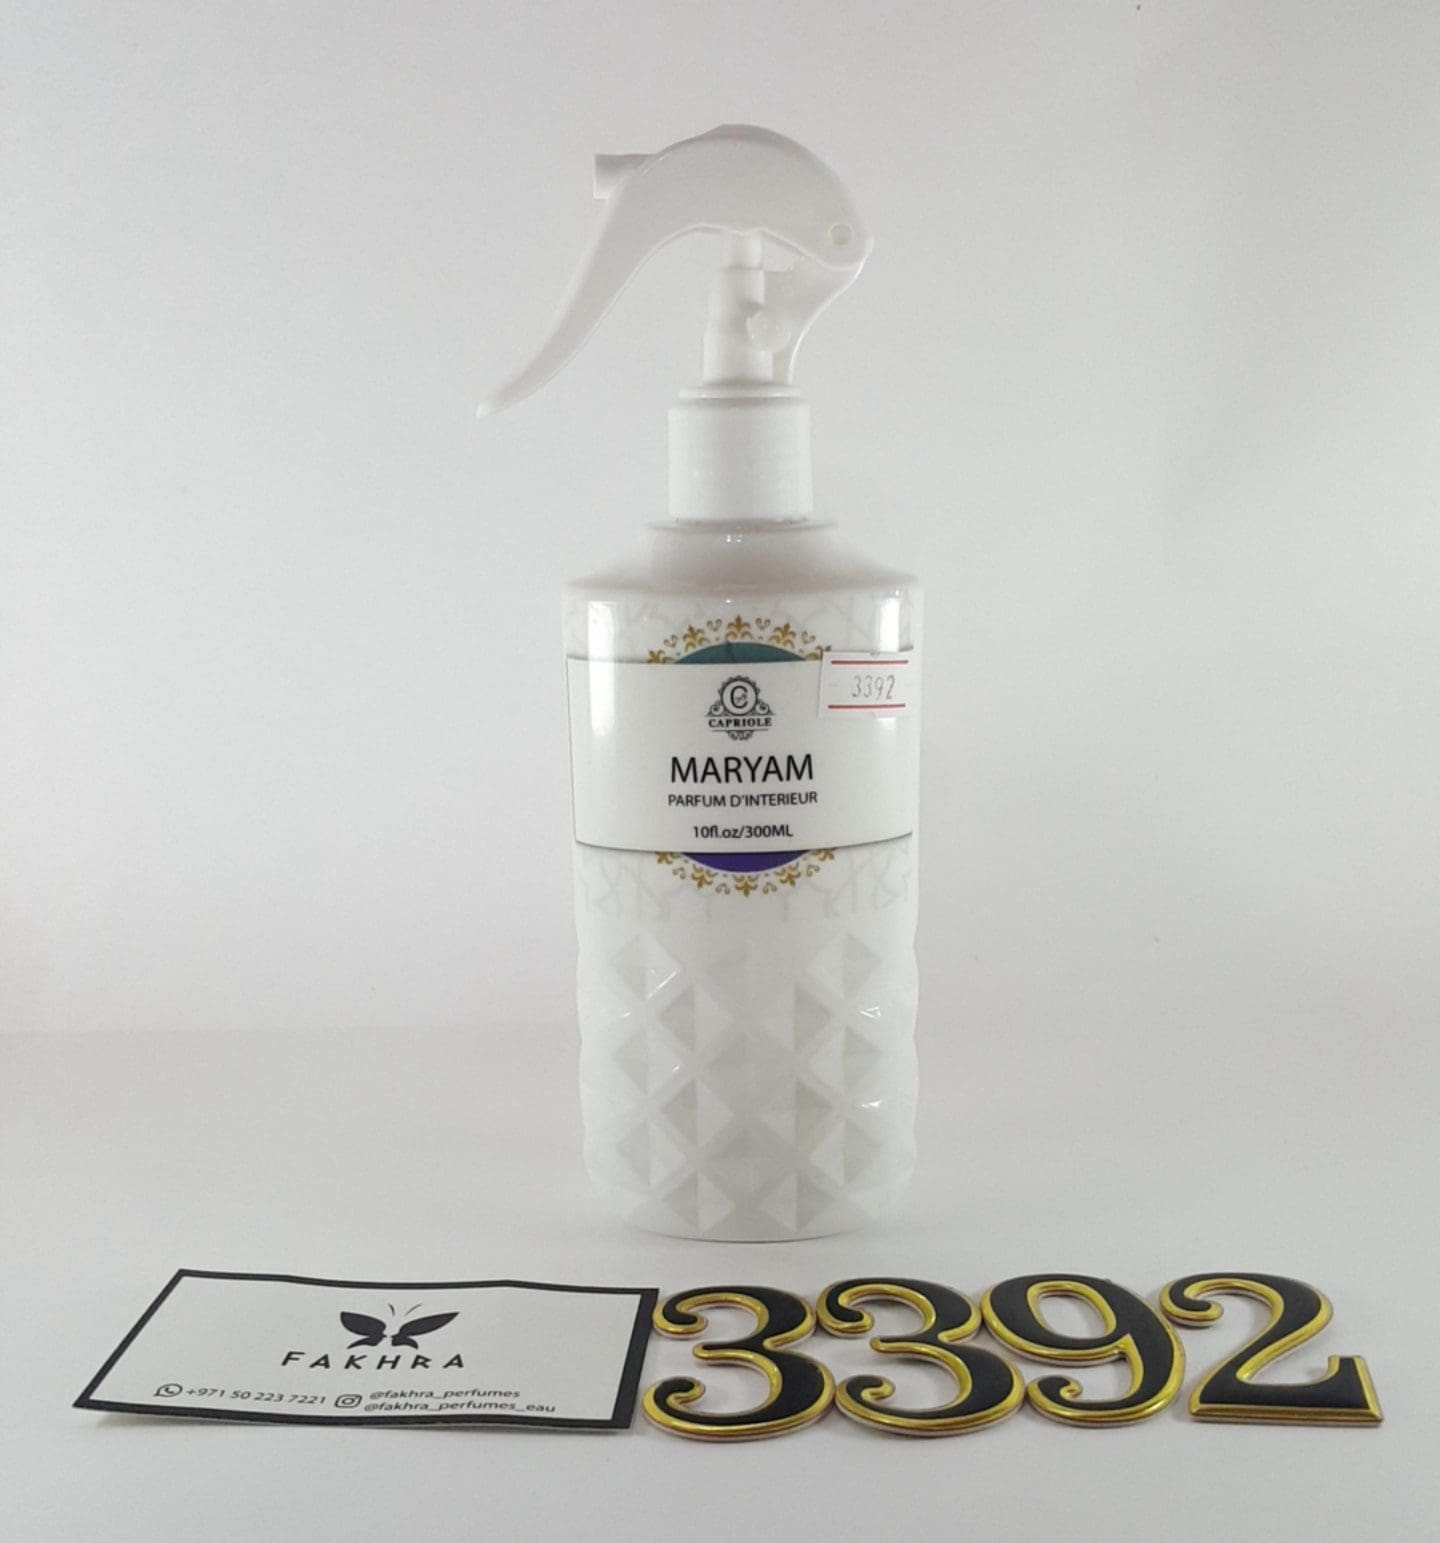 3392 Capriole MARYAM Home perfume 300 ml